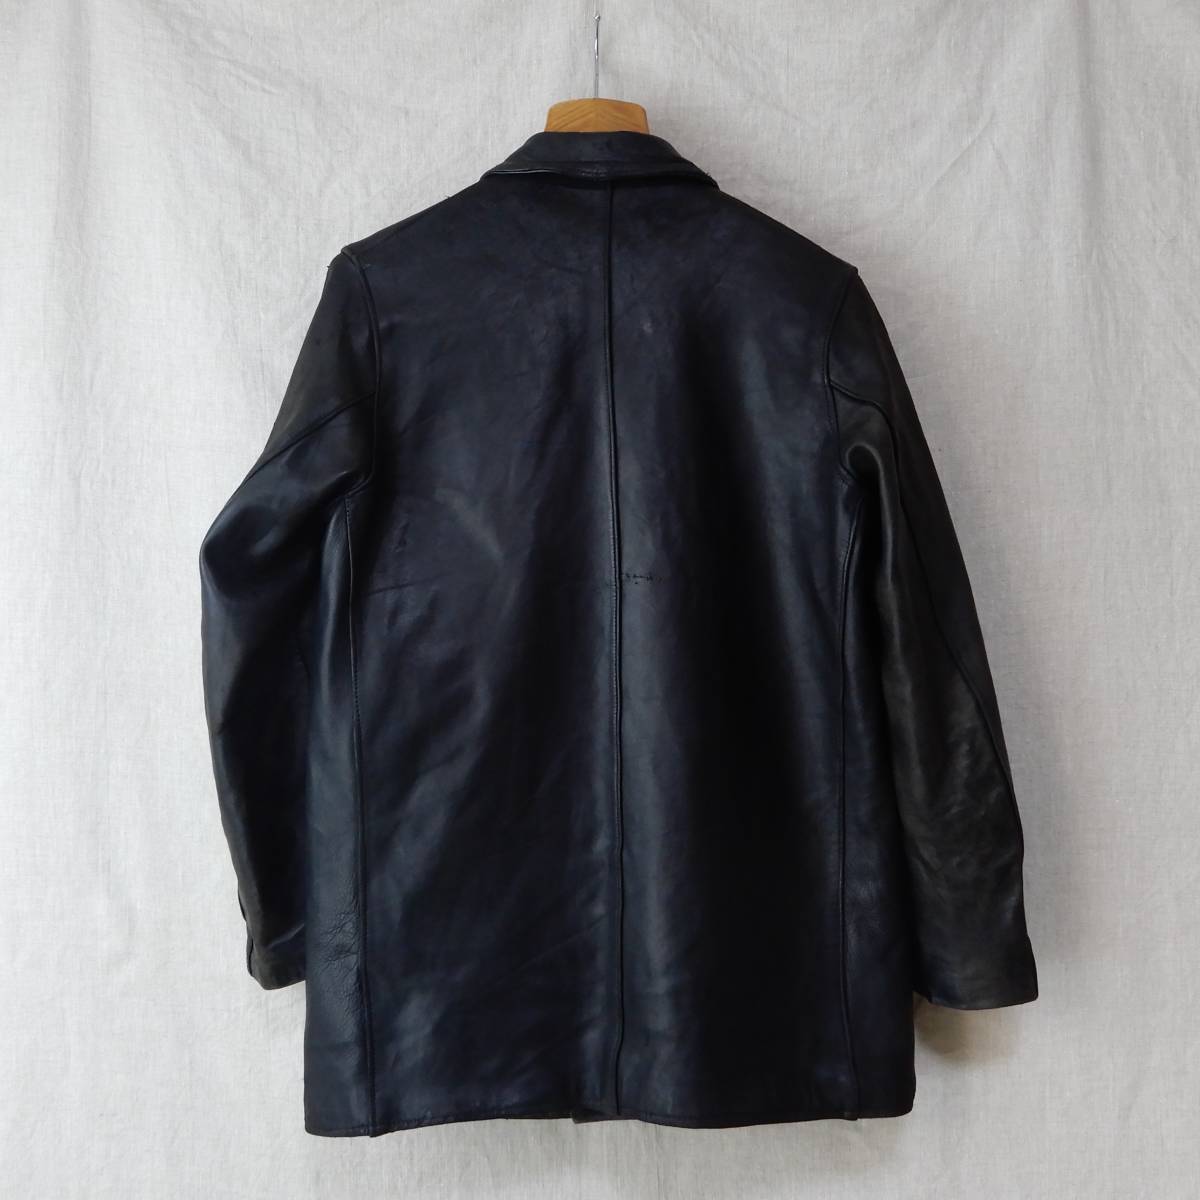 French Work Leather Jacket Black Le Corbusier Jacket Vintage